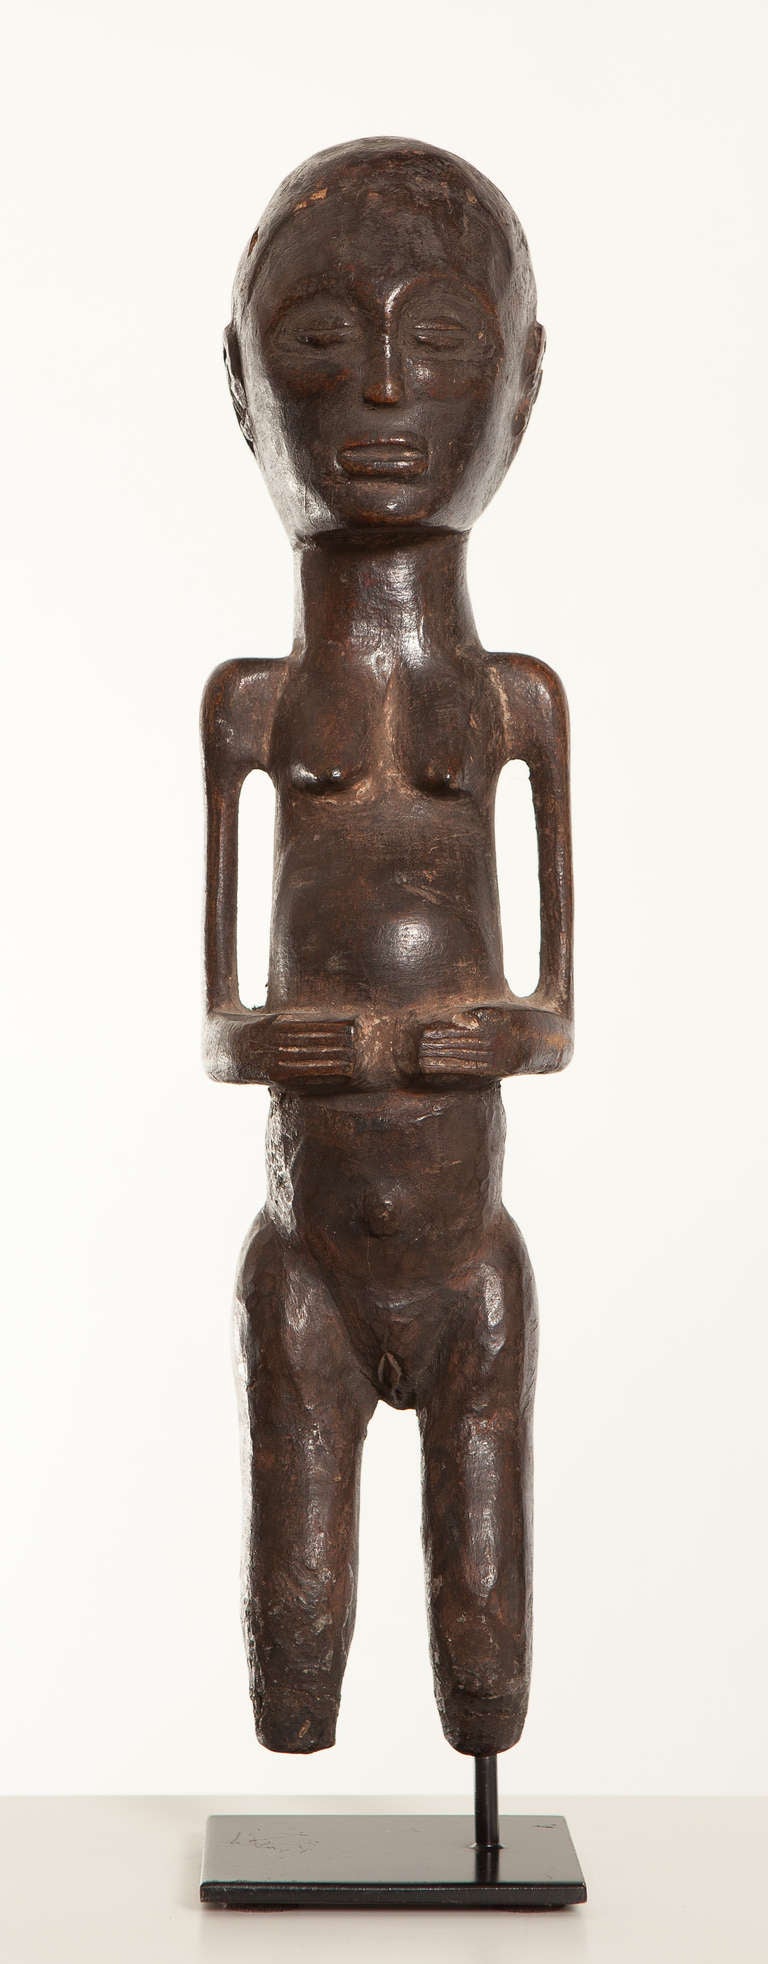 Female  Mwanga figure with realistic appearance. Feet are missing.